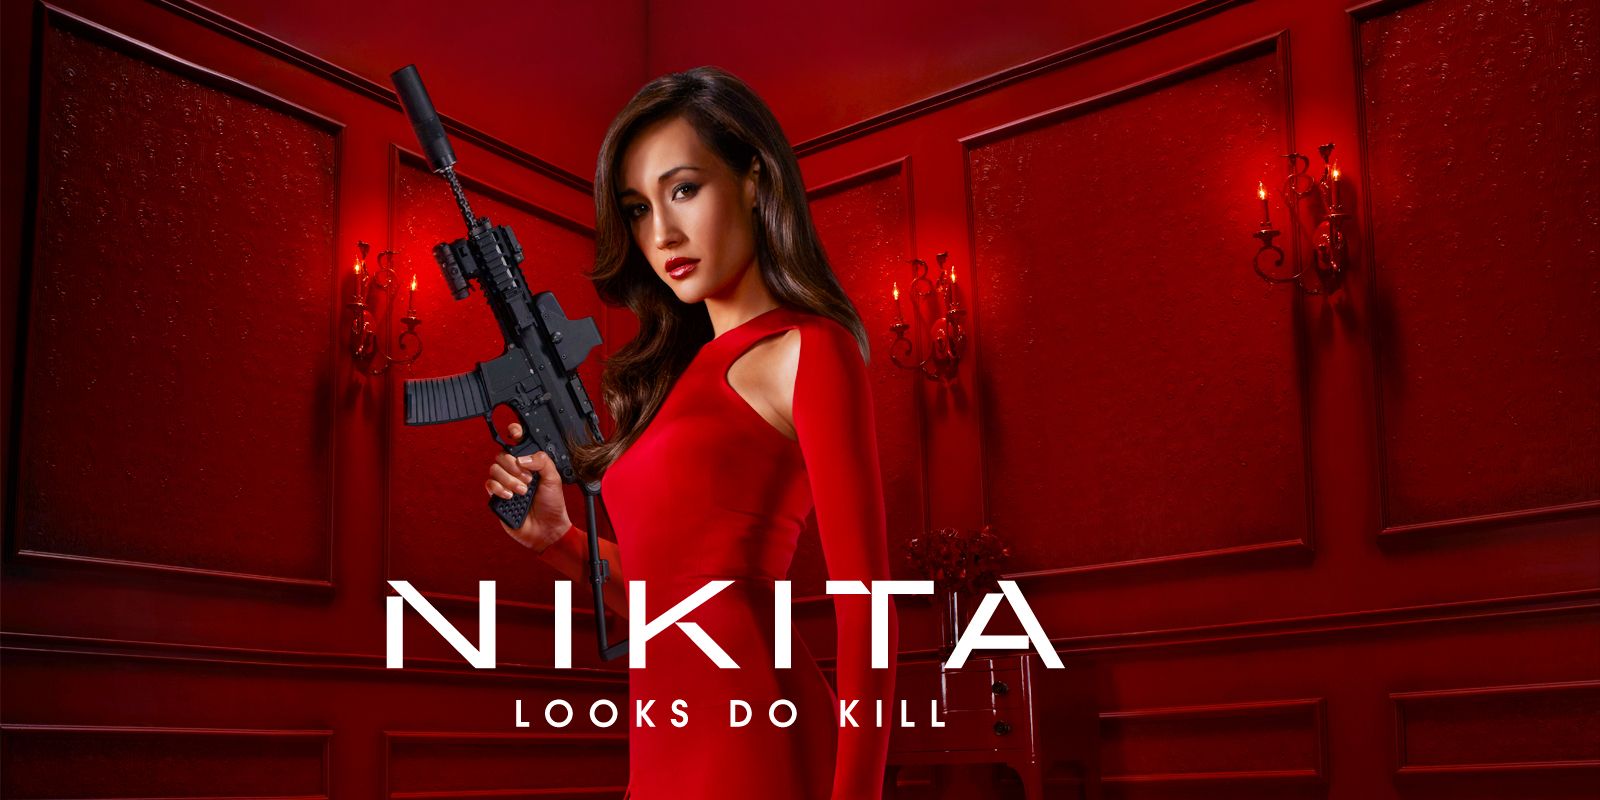 Nikita promo features Maggie Q holding a gun